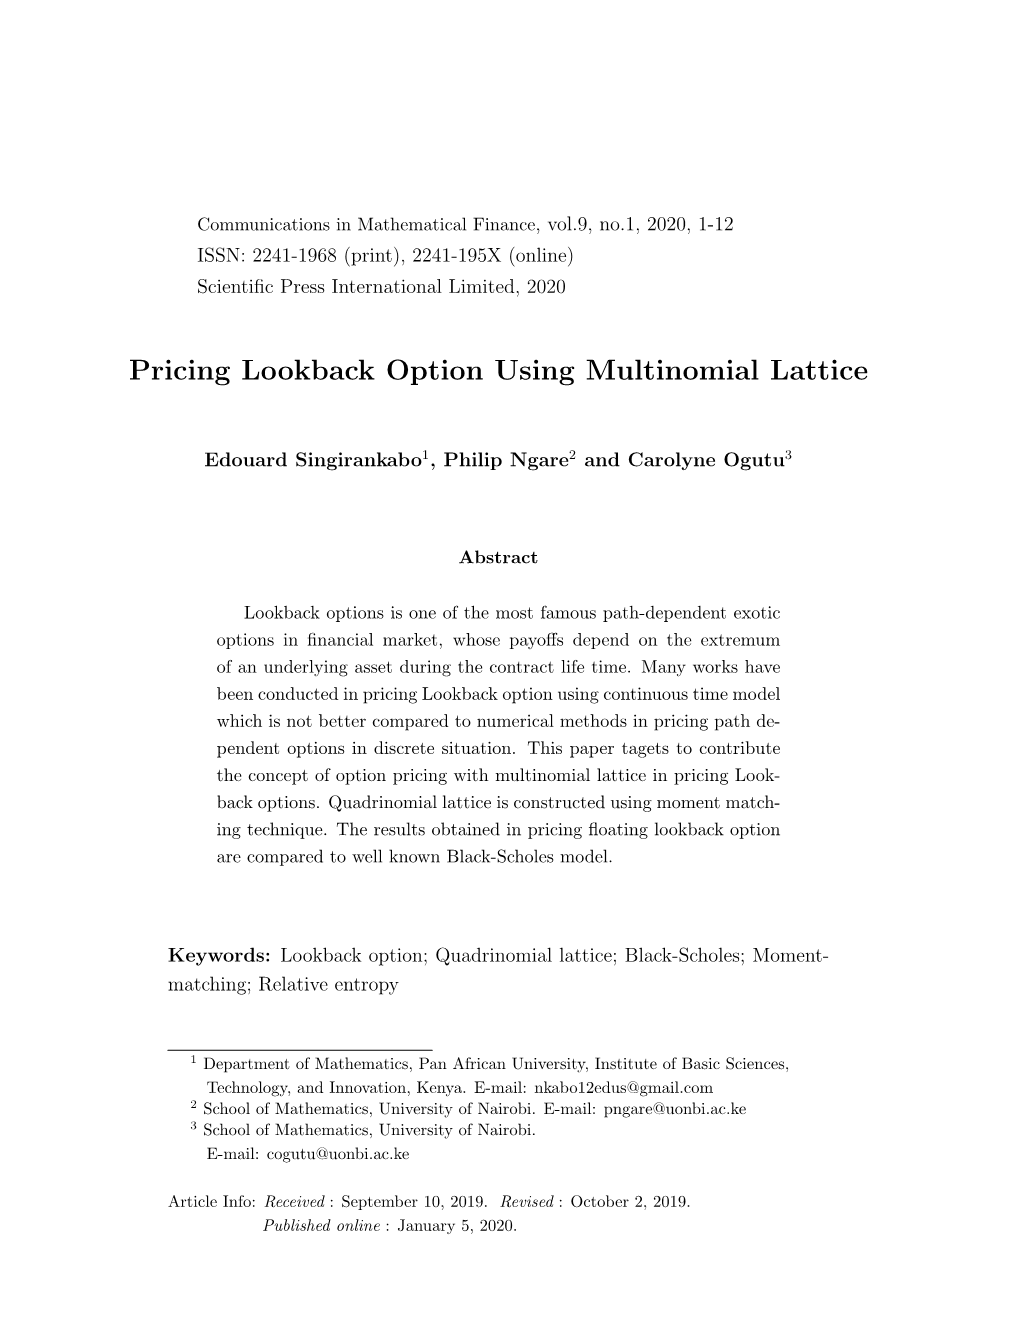 Pricing Lookback Option Using Multinomial Lattice -.: Scientific Press International Limited